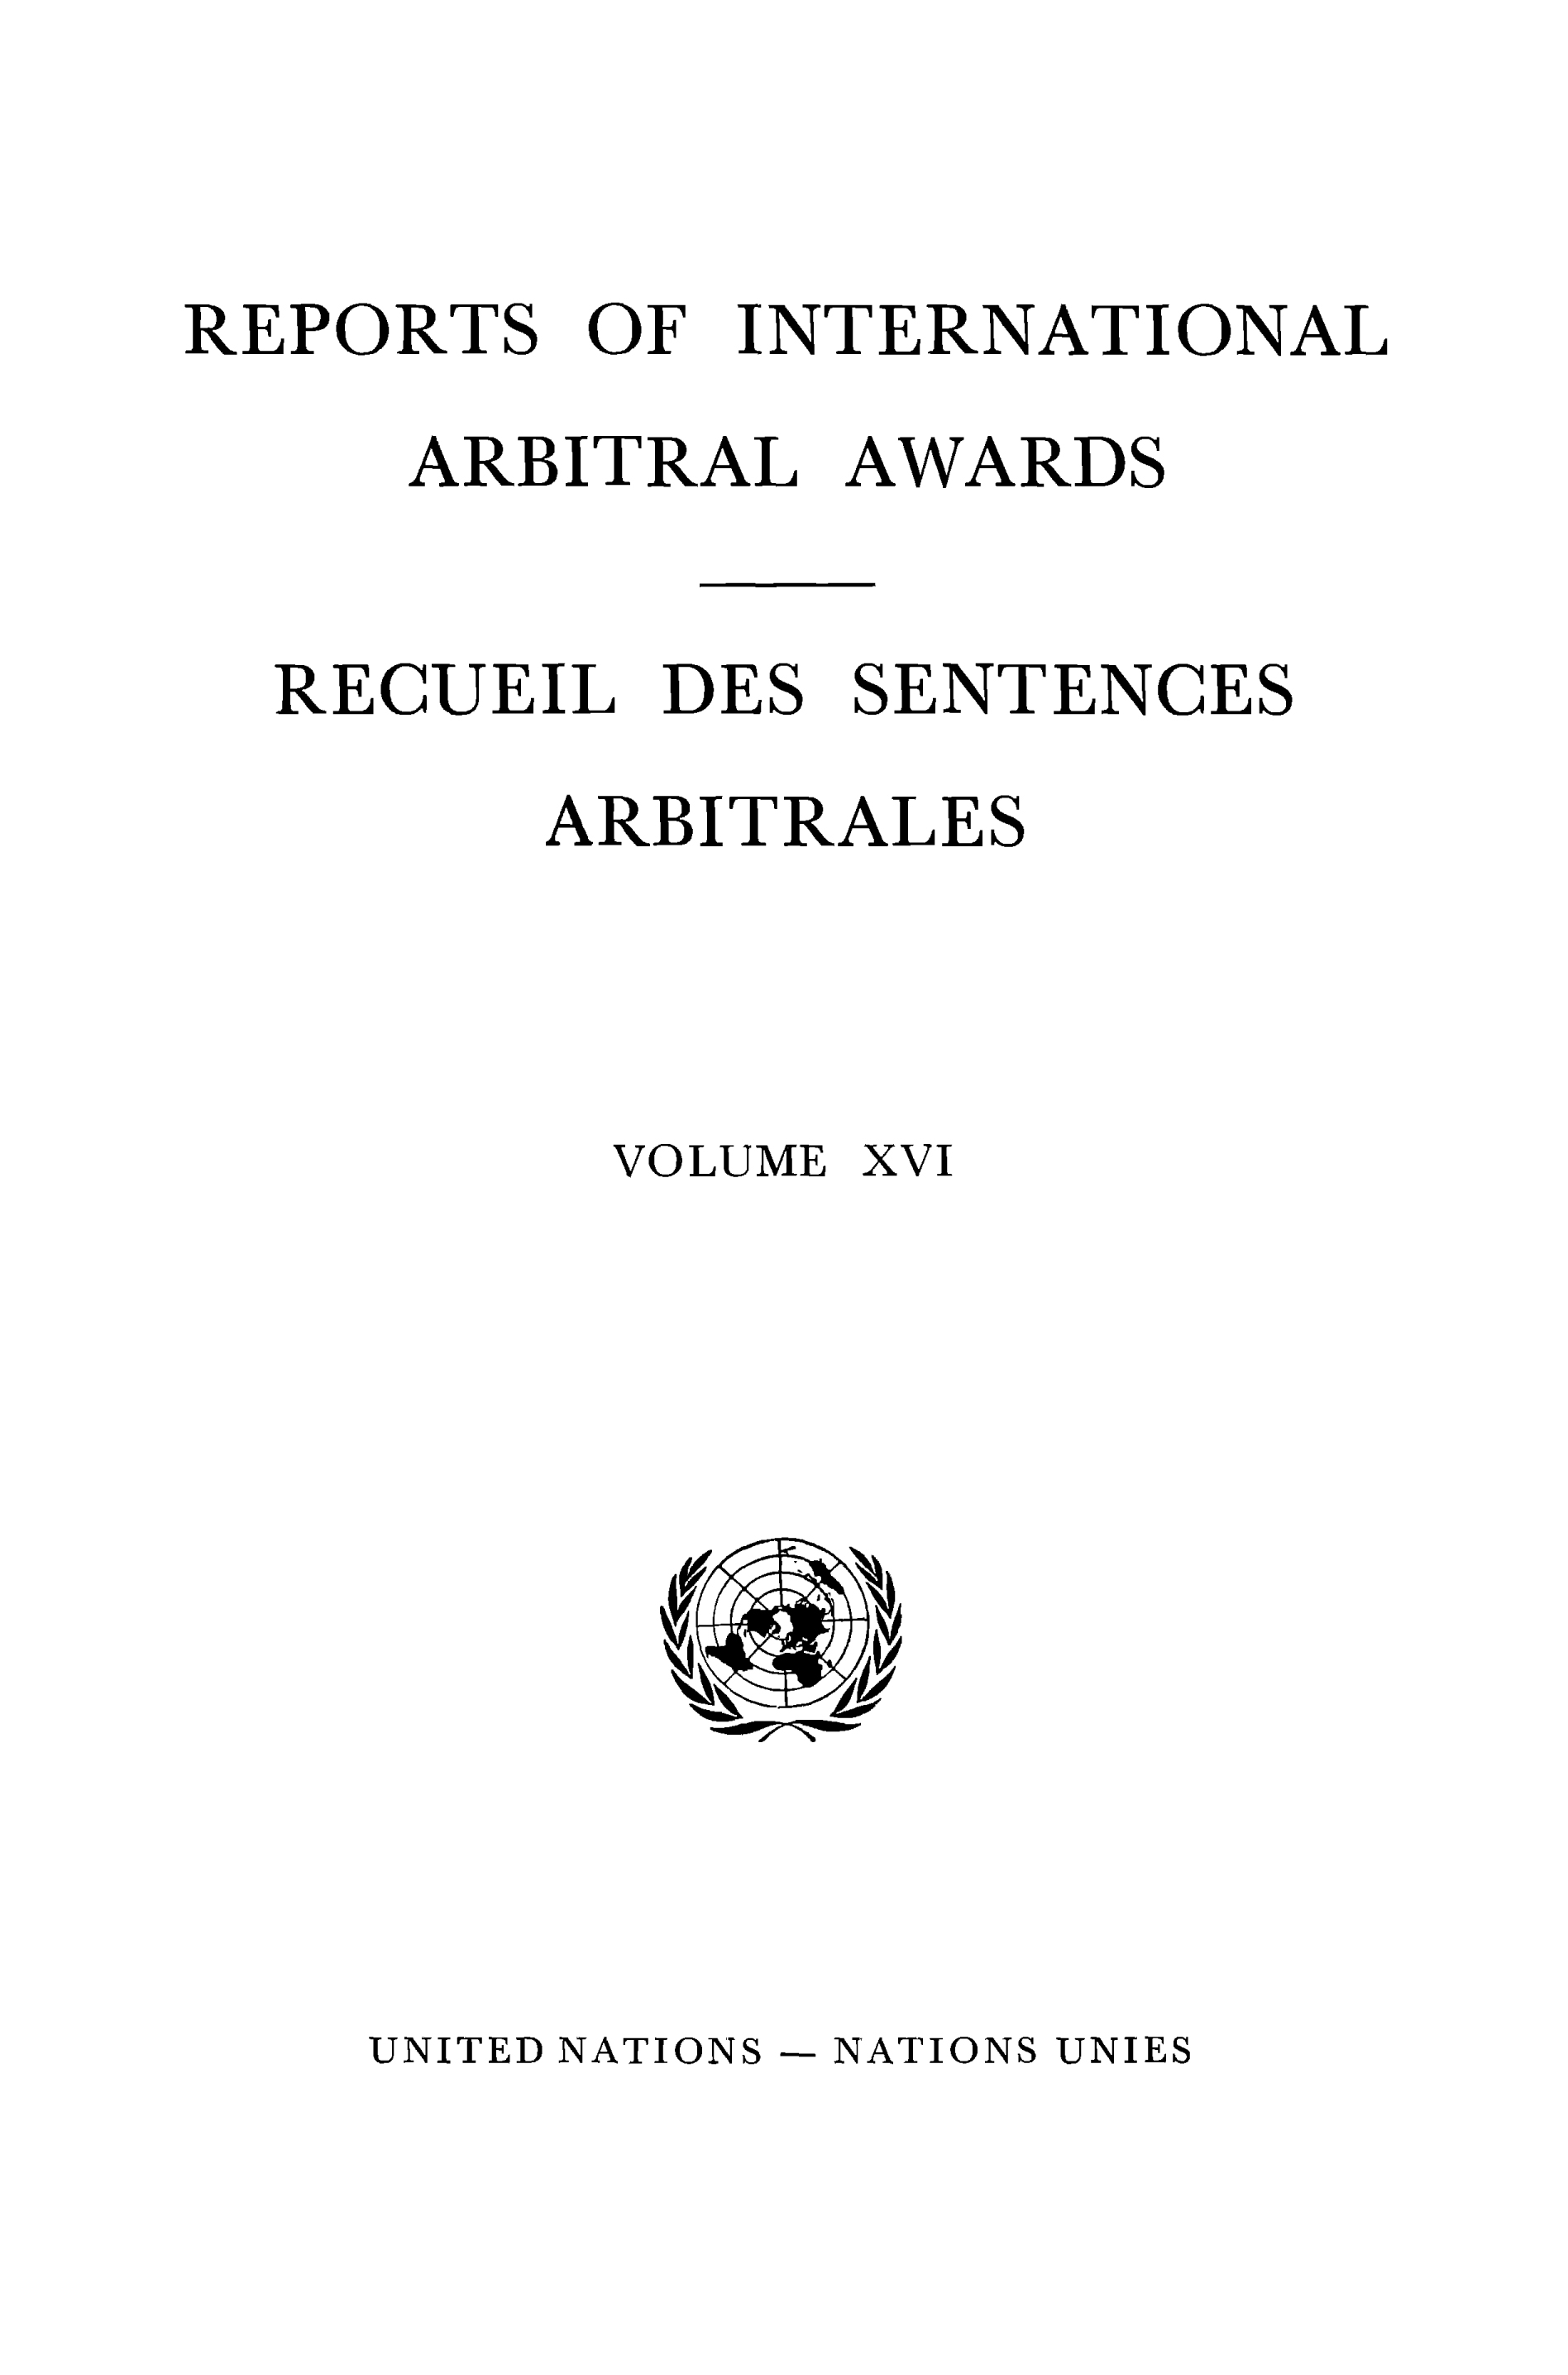 image of Recueil des sentences arbitrales, vol. XVI